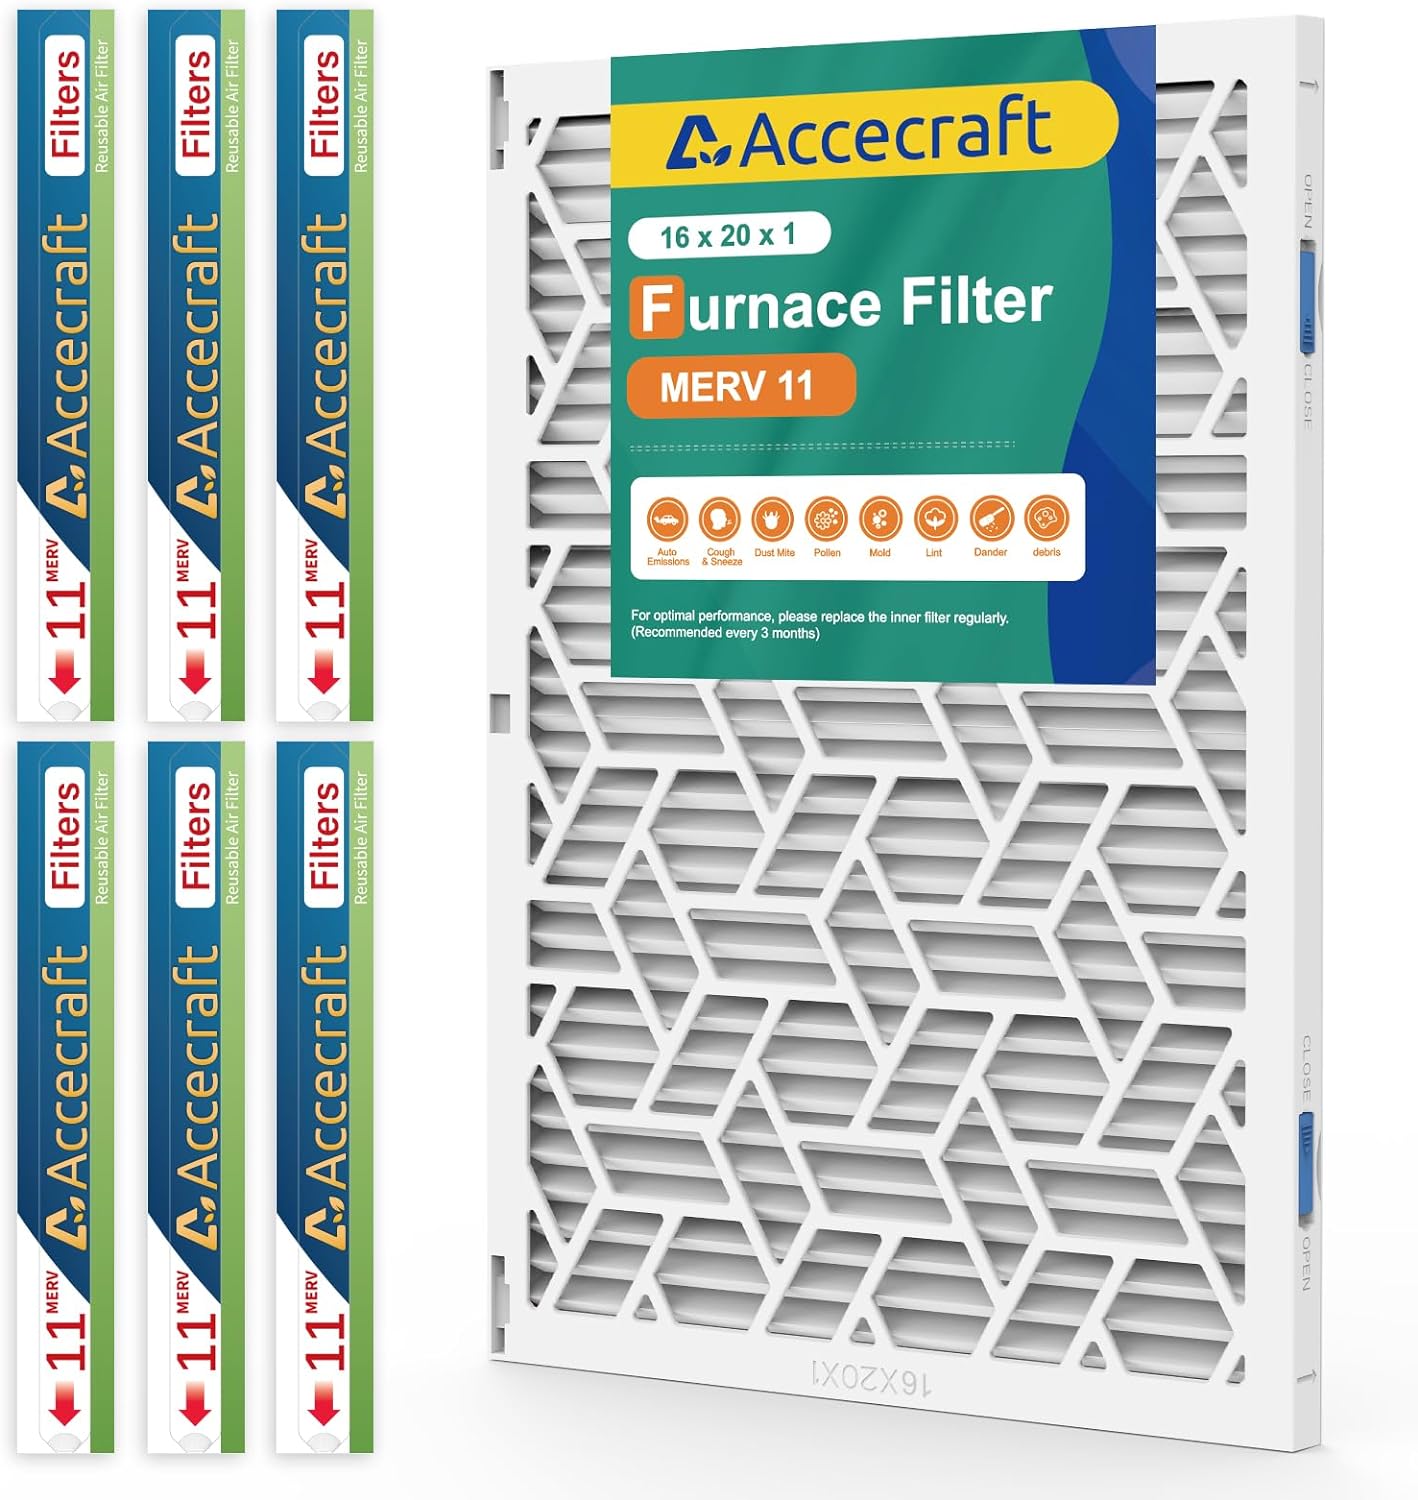 Accecraft 16x20x1 Reusable ABS Air Filter